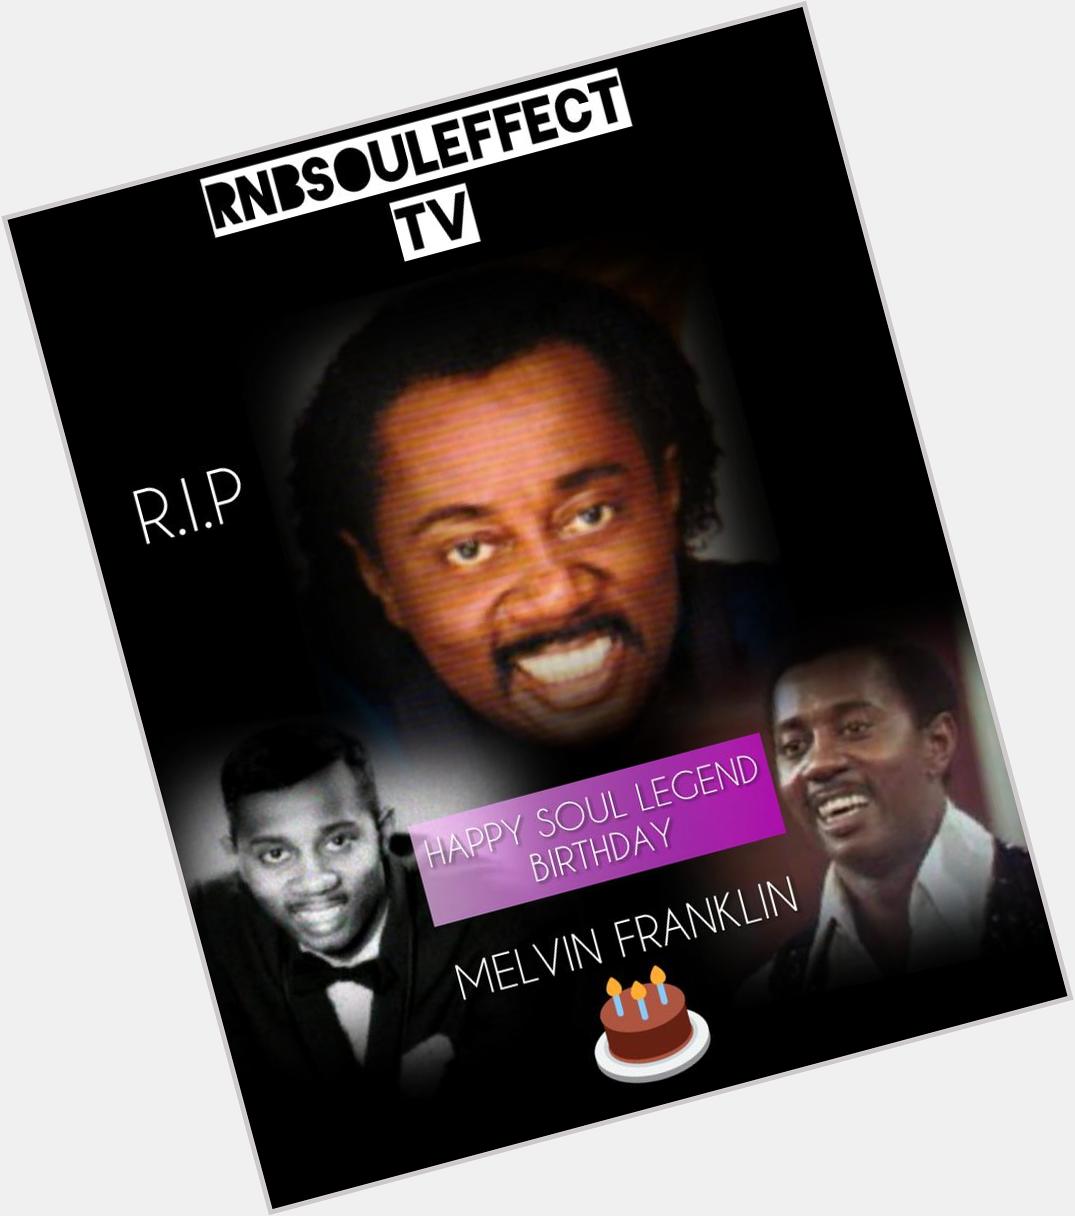 Happy Soul Legend Birthday Melvin Franklin     